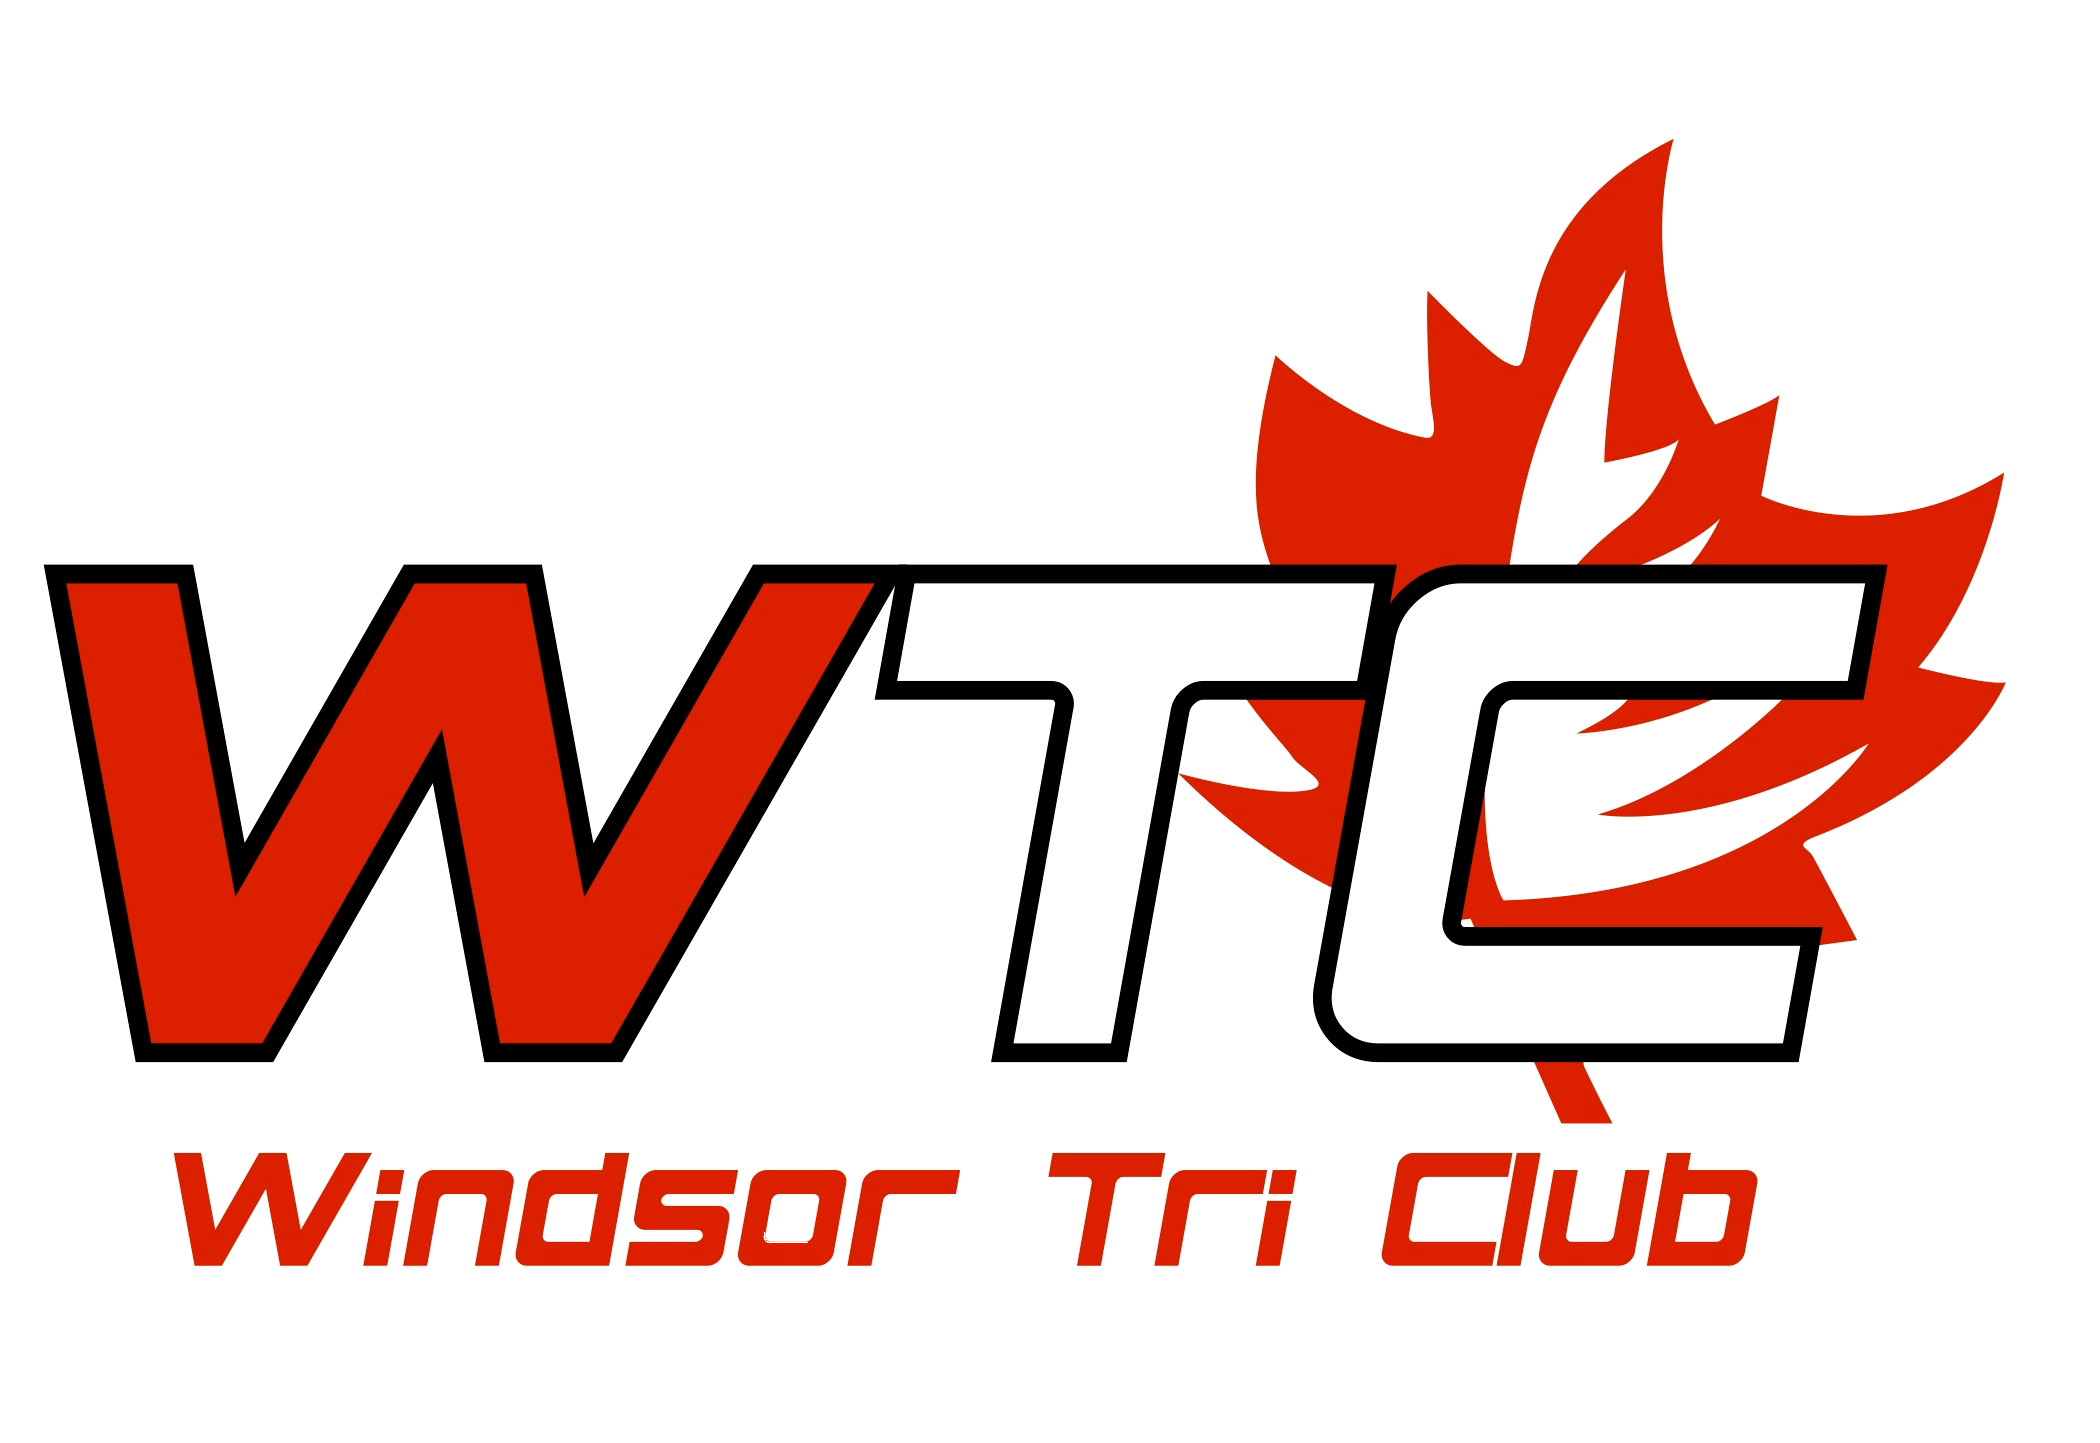 Windsor Triclub logo